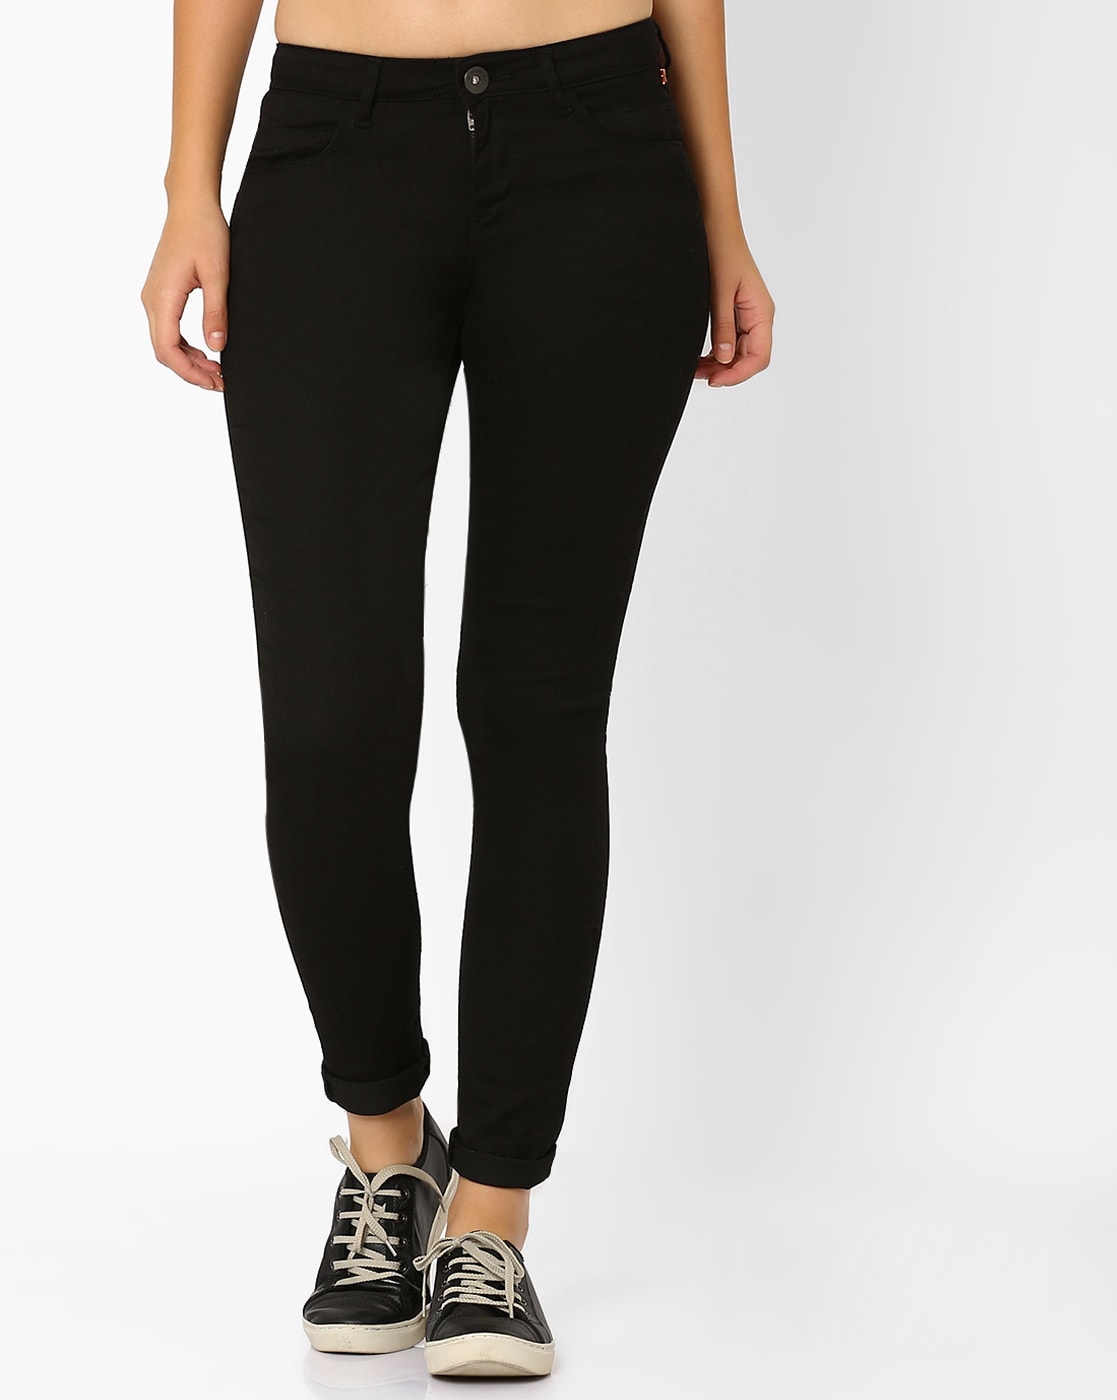 Buy Black Jeans  Jeggings for Women by SF Jeans by Pantaloons Online   Ajiocom